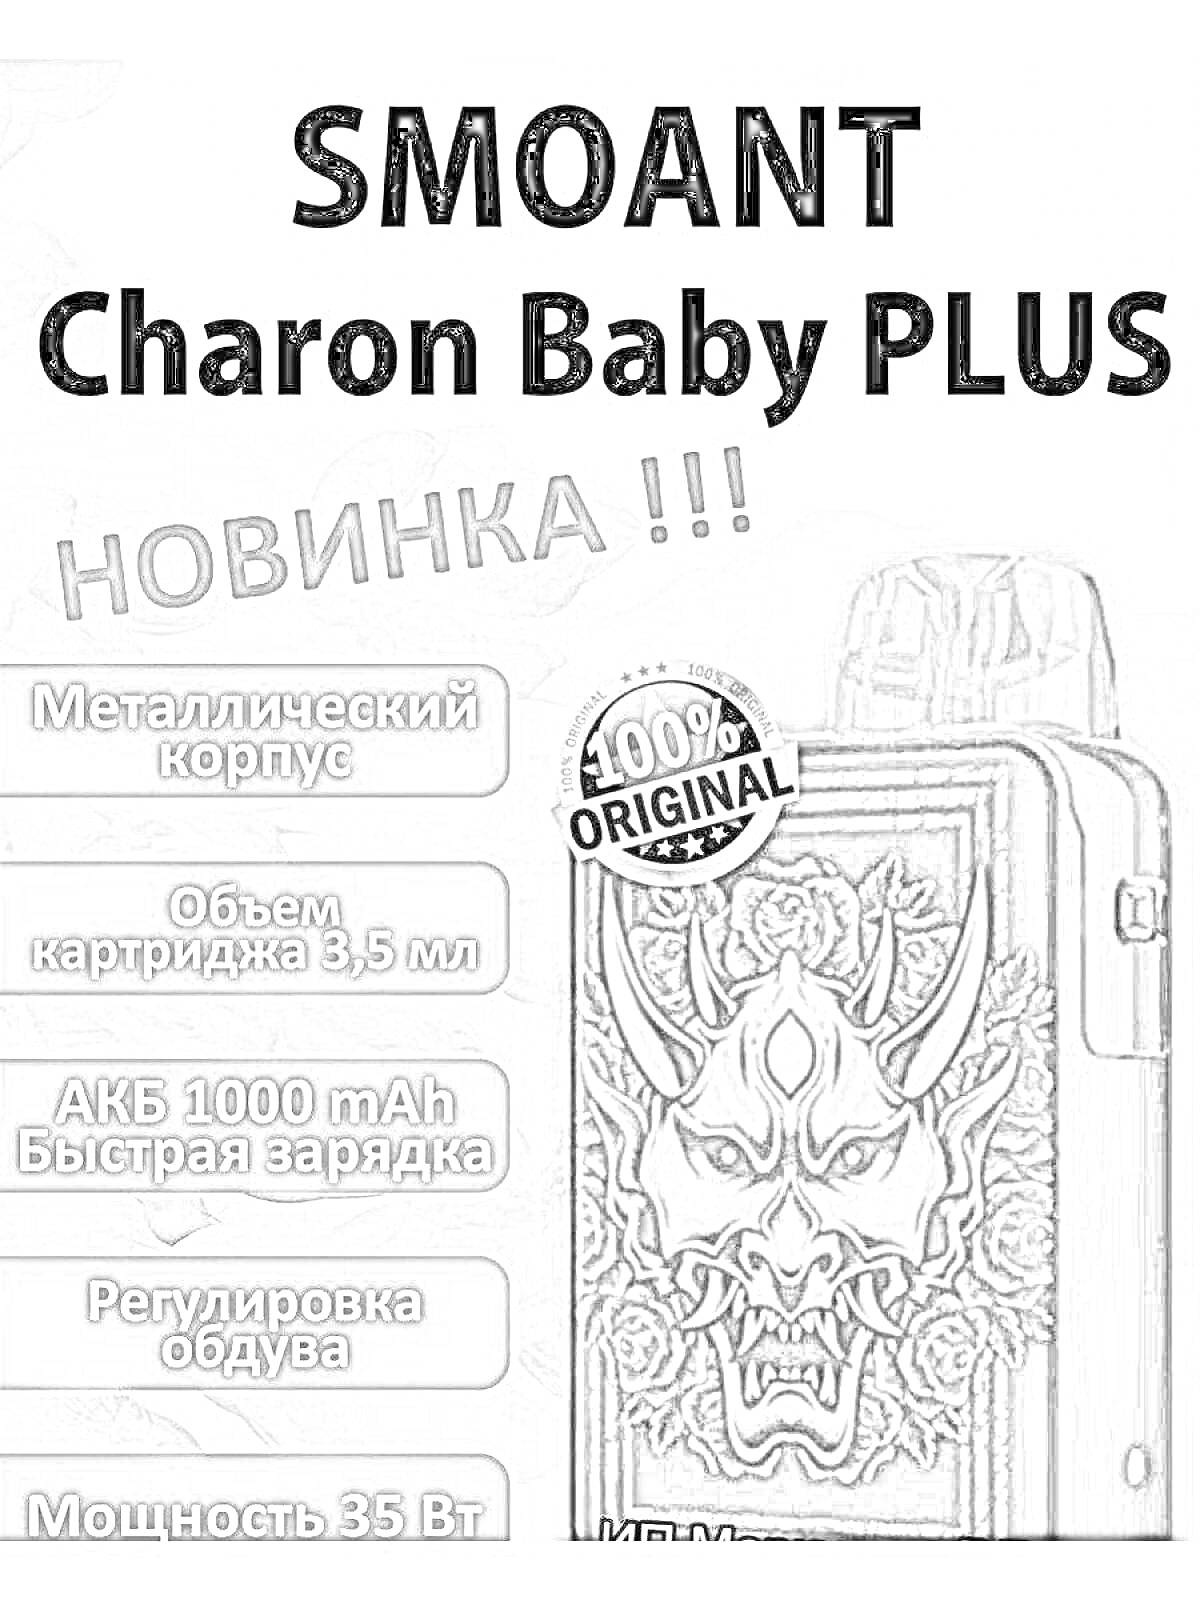 Раскраска SMOANT Charon Baby PLUS - металлический корпус, объем картриджа 3,5 мл, АКБ 1000 мАч быстрая зарядка, регулировка обдува, мощность 35 Вт, новинка